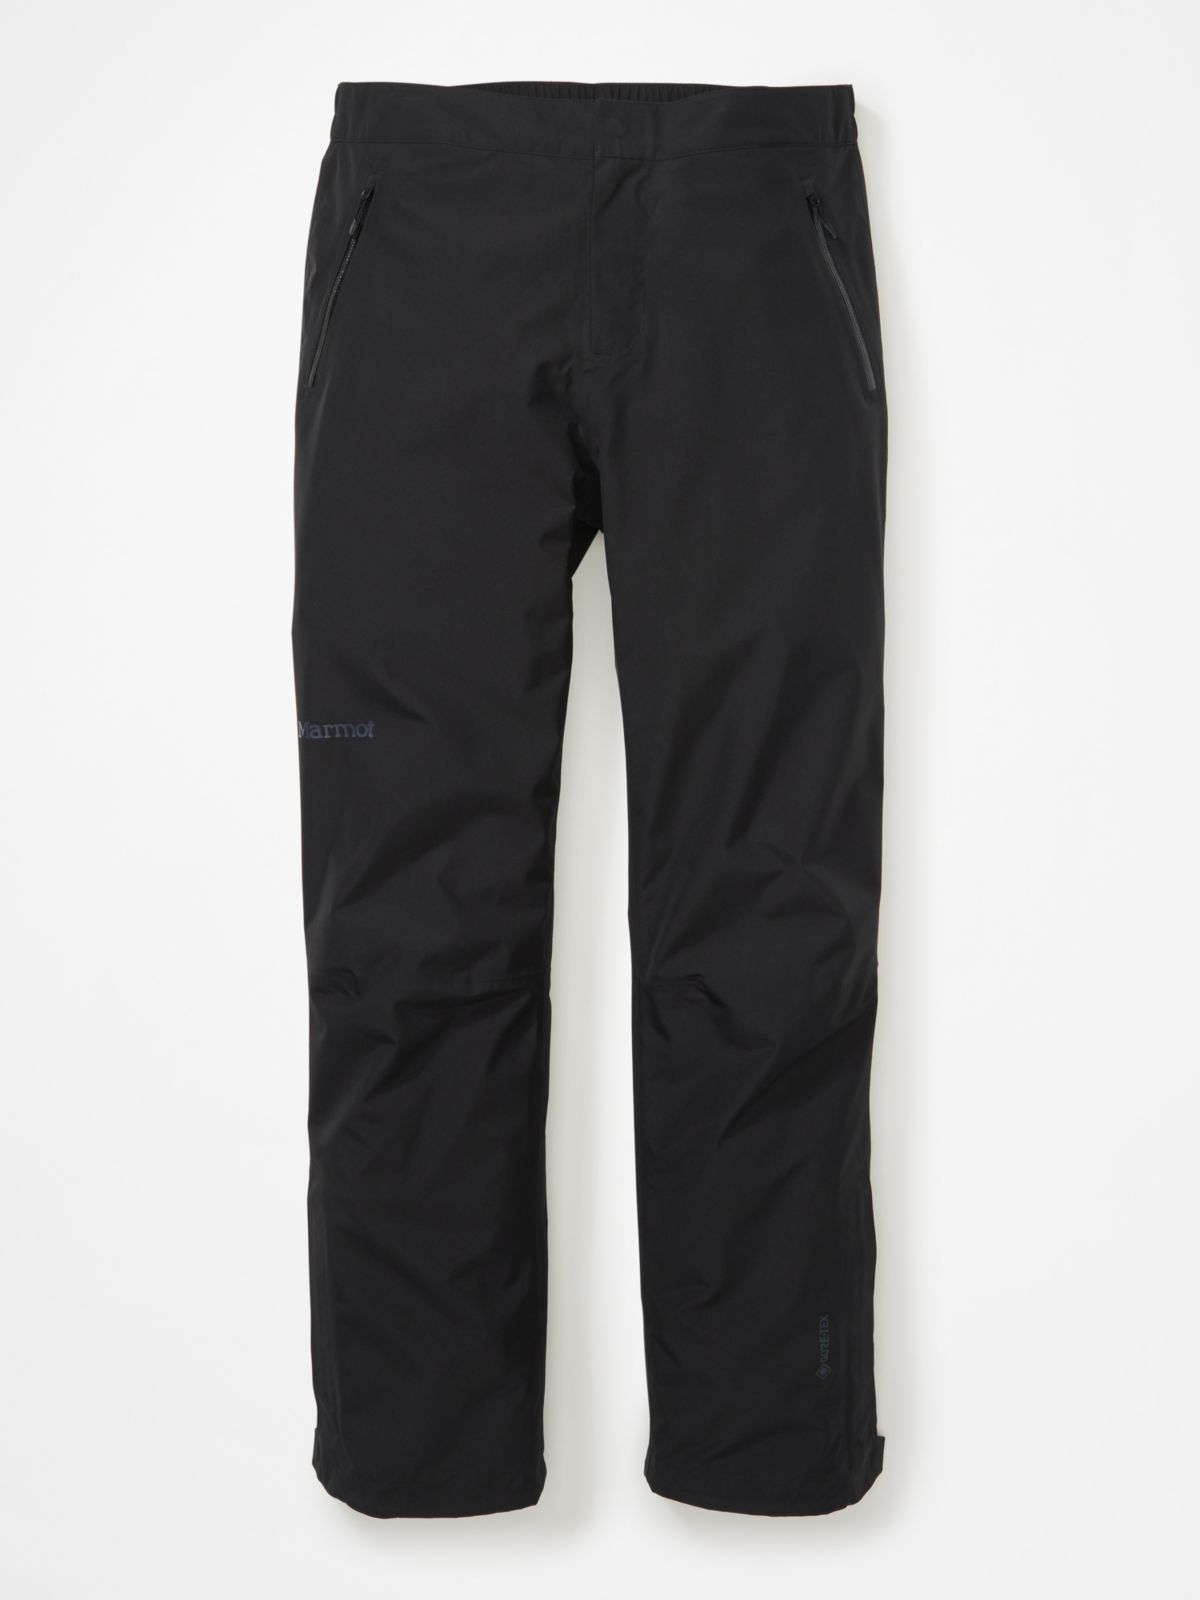 Marmot black pants